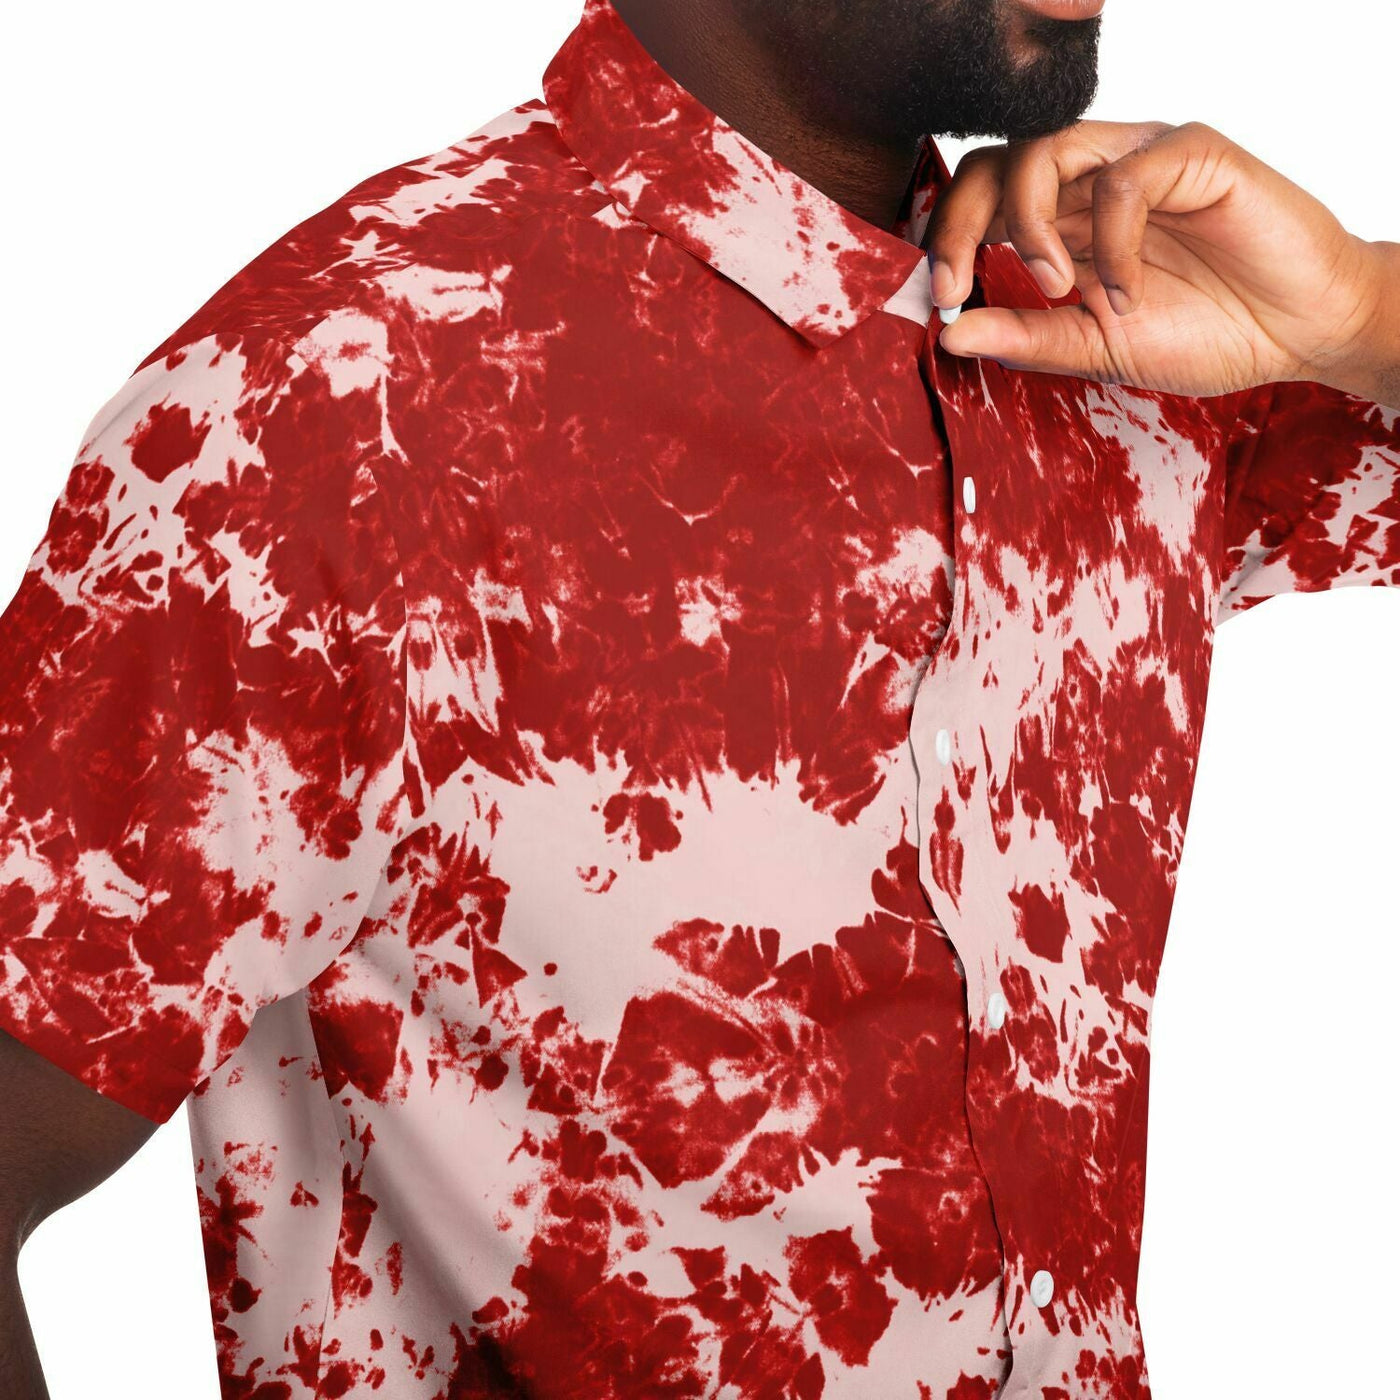 Red & White tie-dye Effect | Retro pop Short Sleeves Shirt